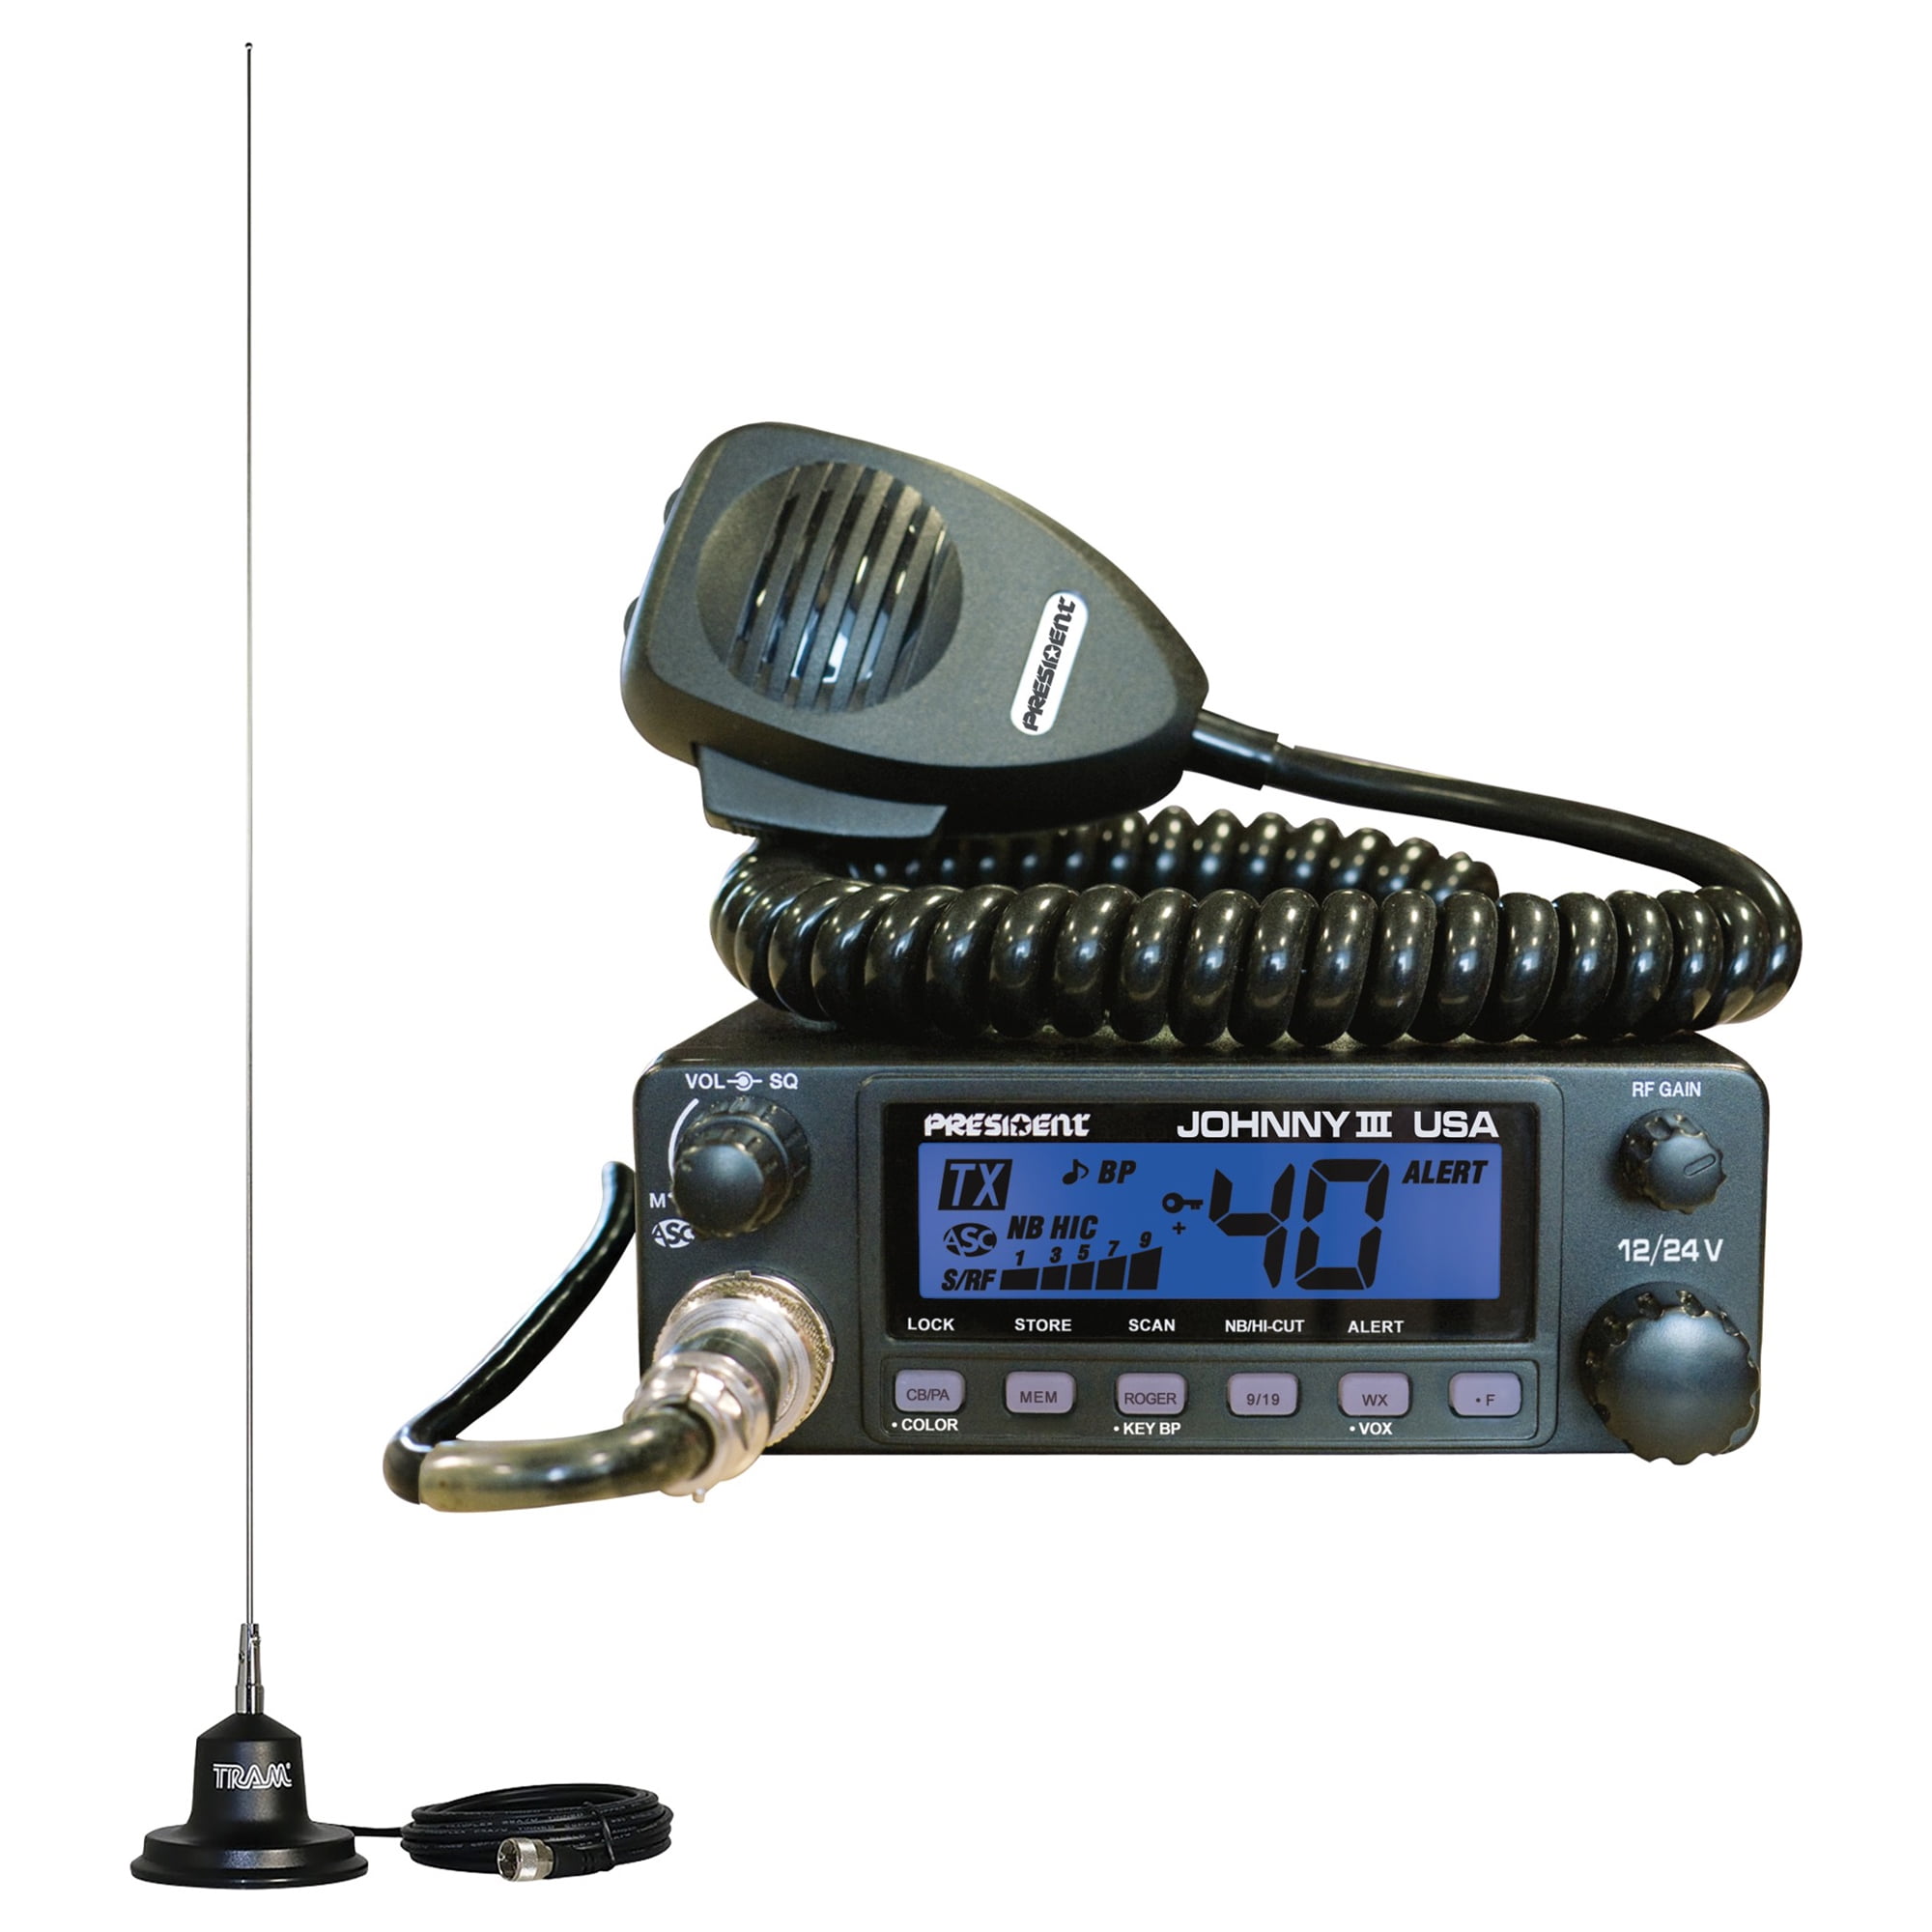 ANTENNE RADIO CB aimant - 72 cm 300 W câble 4,5 m - camion radio